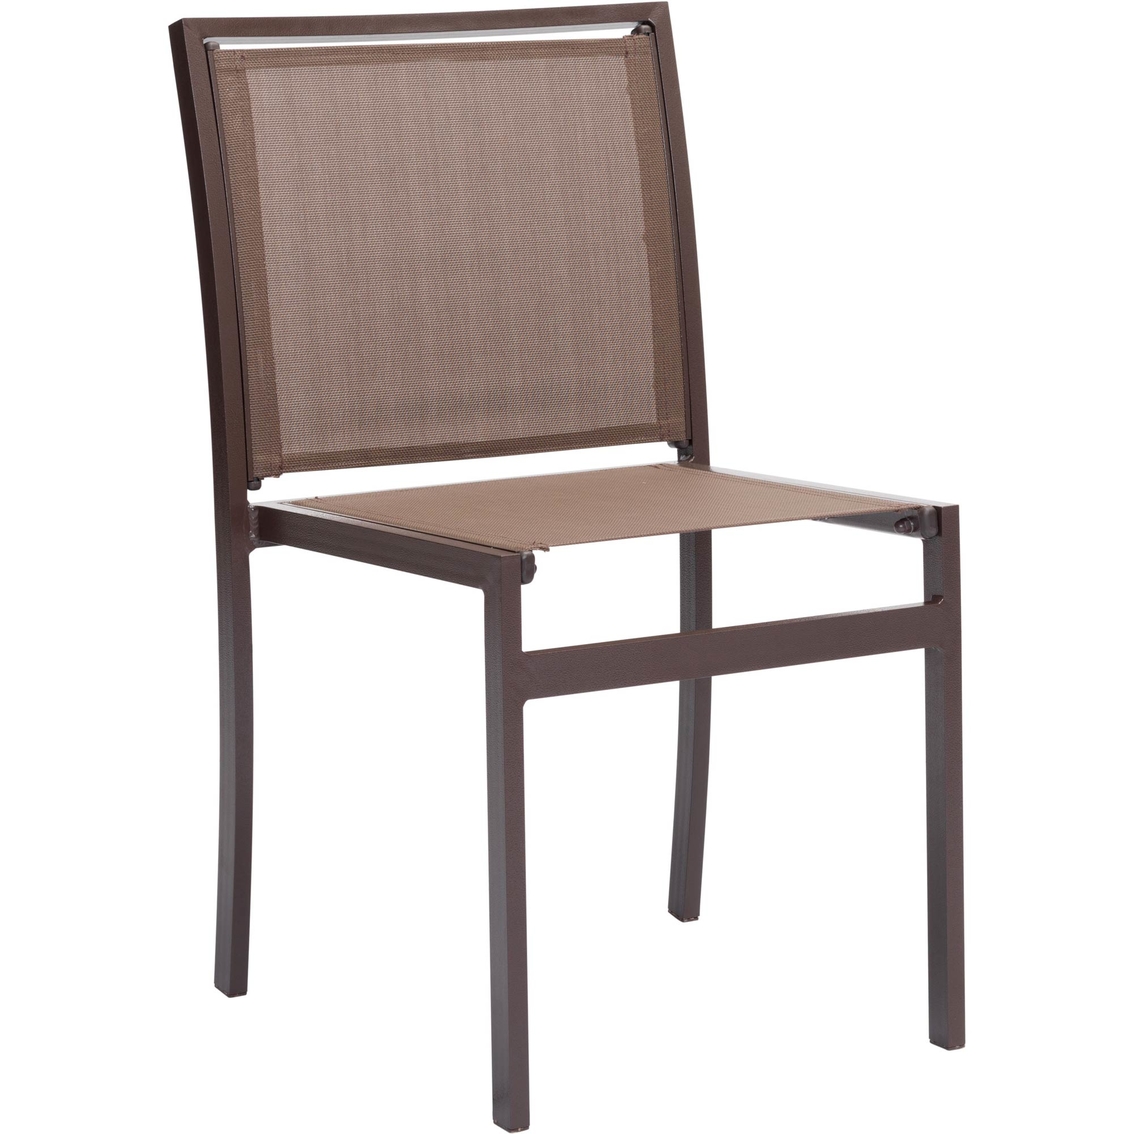 Zuo Modern Mayakoba Dining Chair Brown 2 Pk. - Image 3 of 4